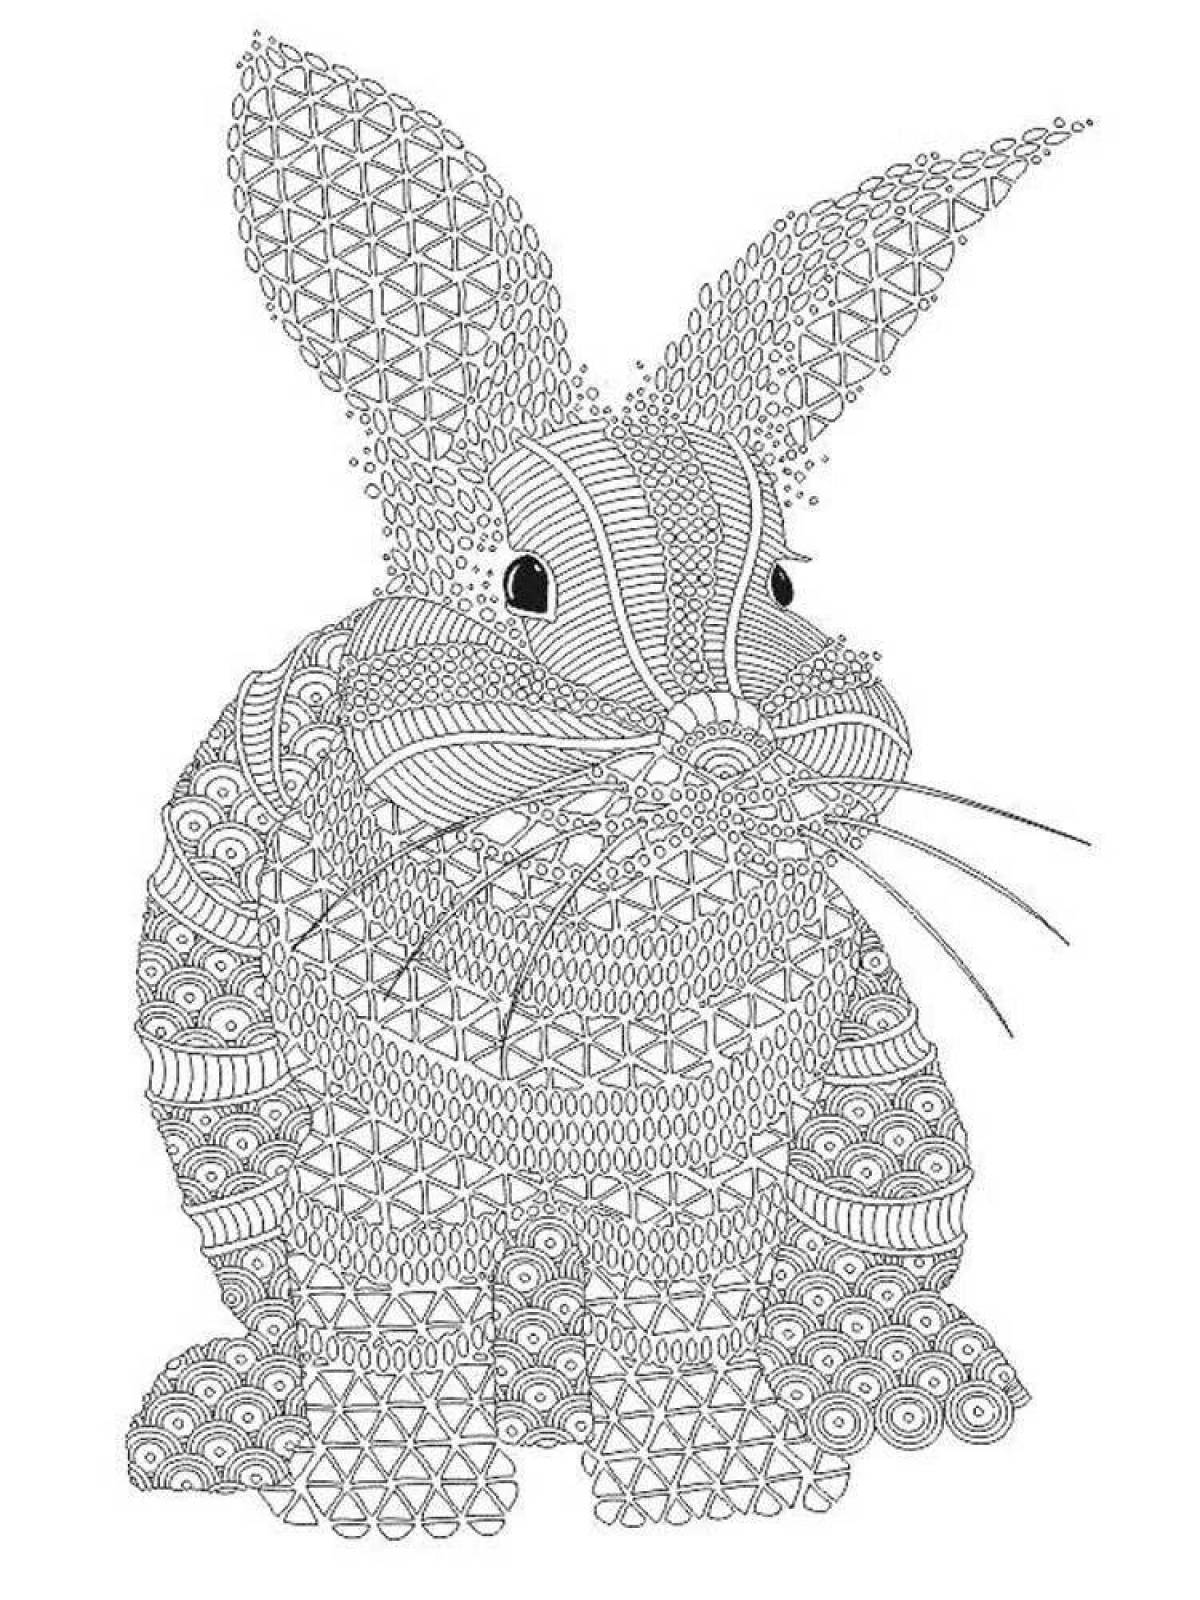 Wonderful anti-stress coloring hare